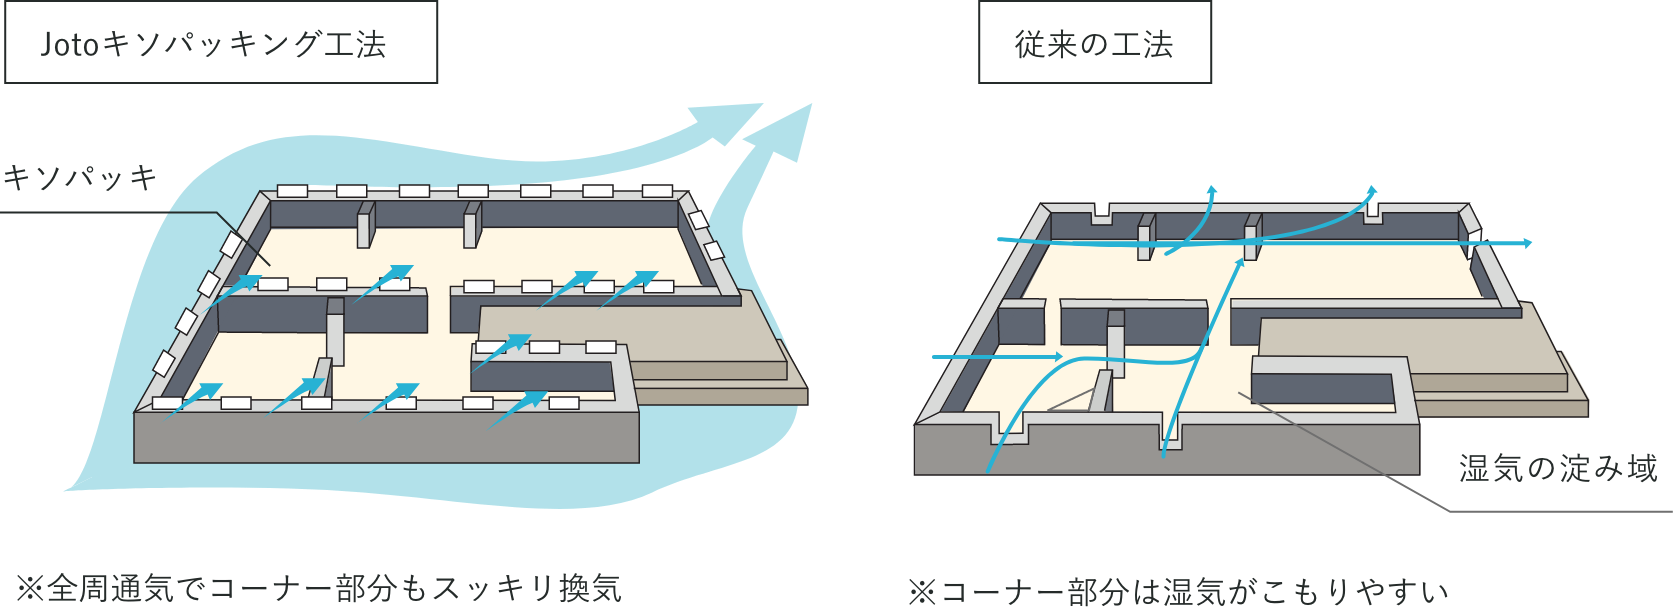 Jotoキソパッキング工法と従来の工法を比較したイラスト